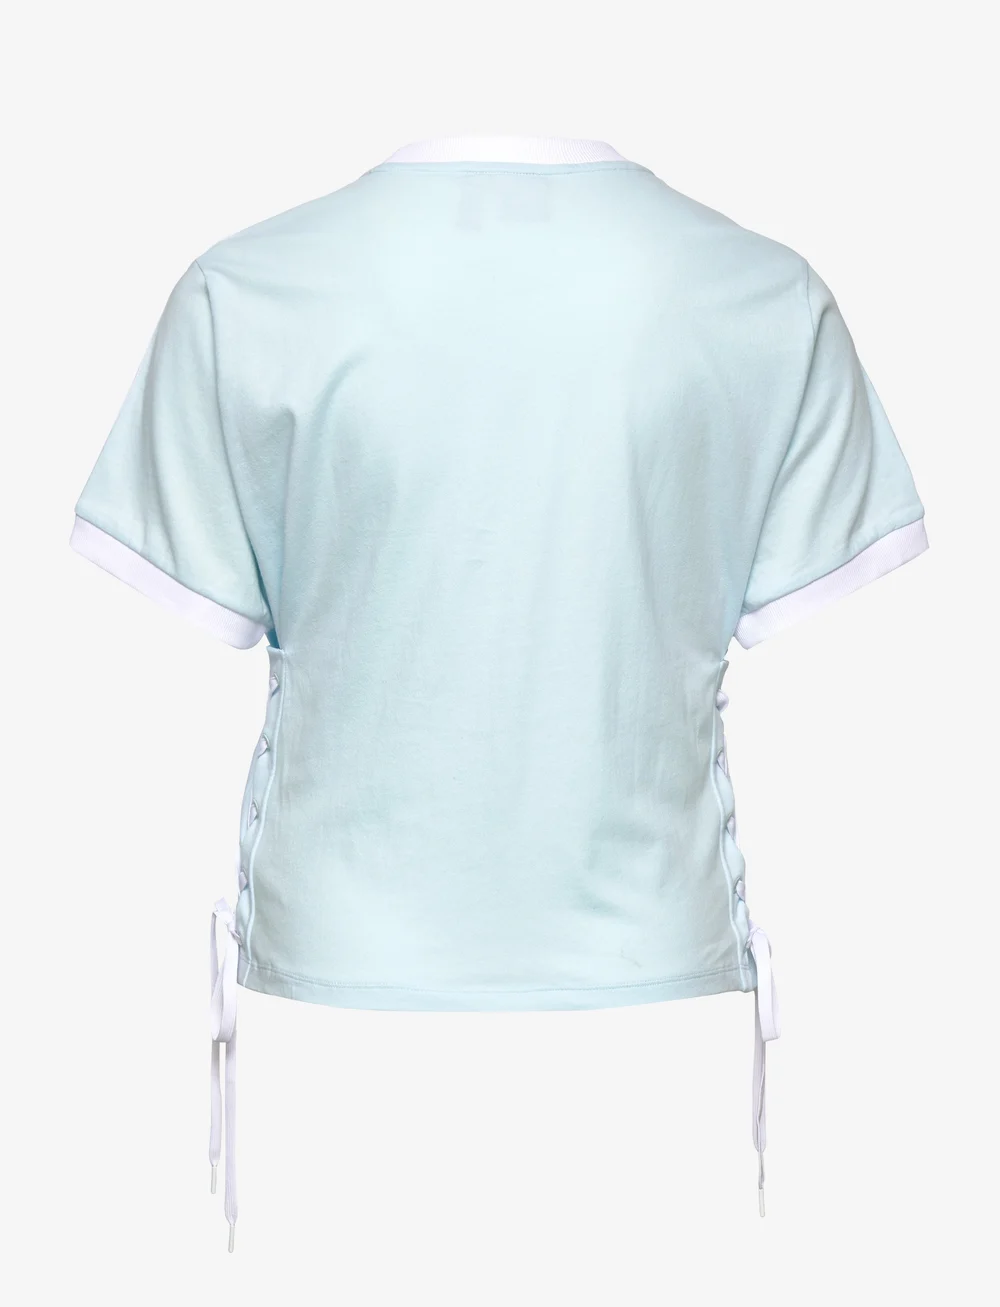 adidas Originals Always Original Laced T-shirt (plus Size) - T-shirts